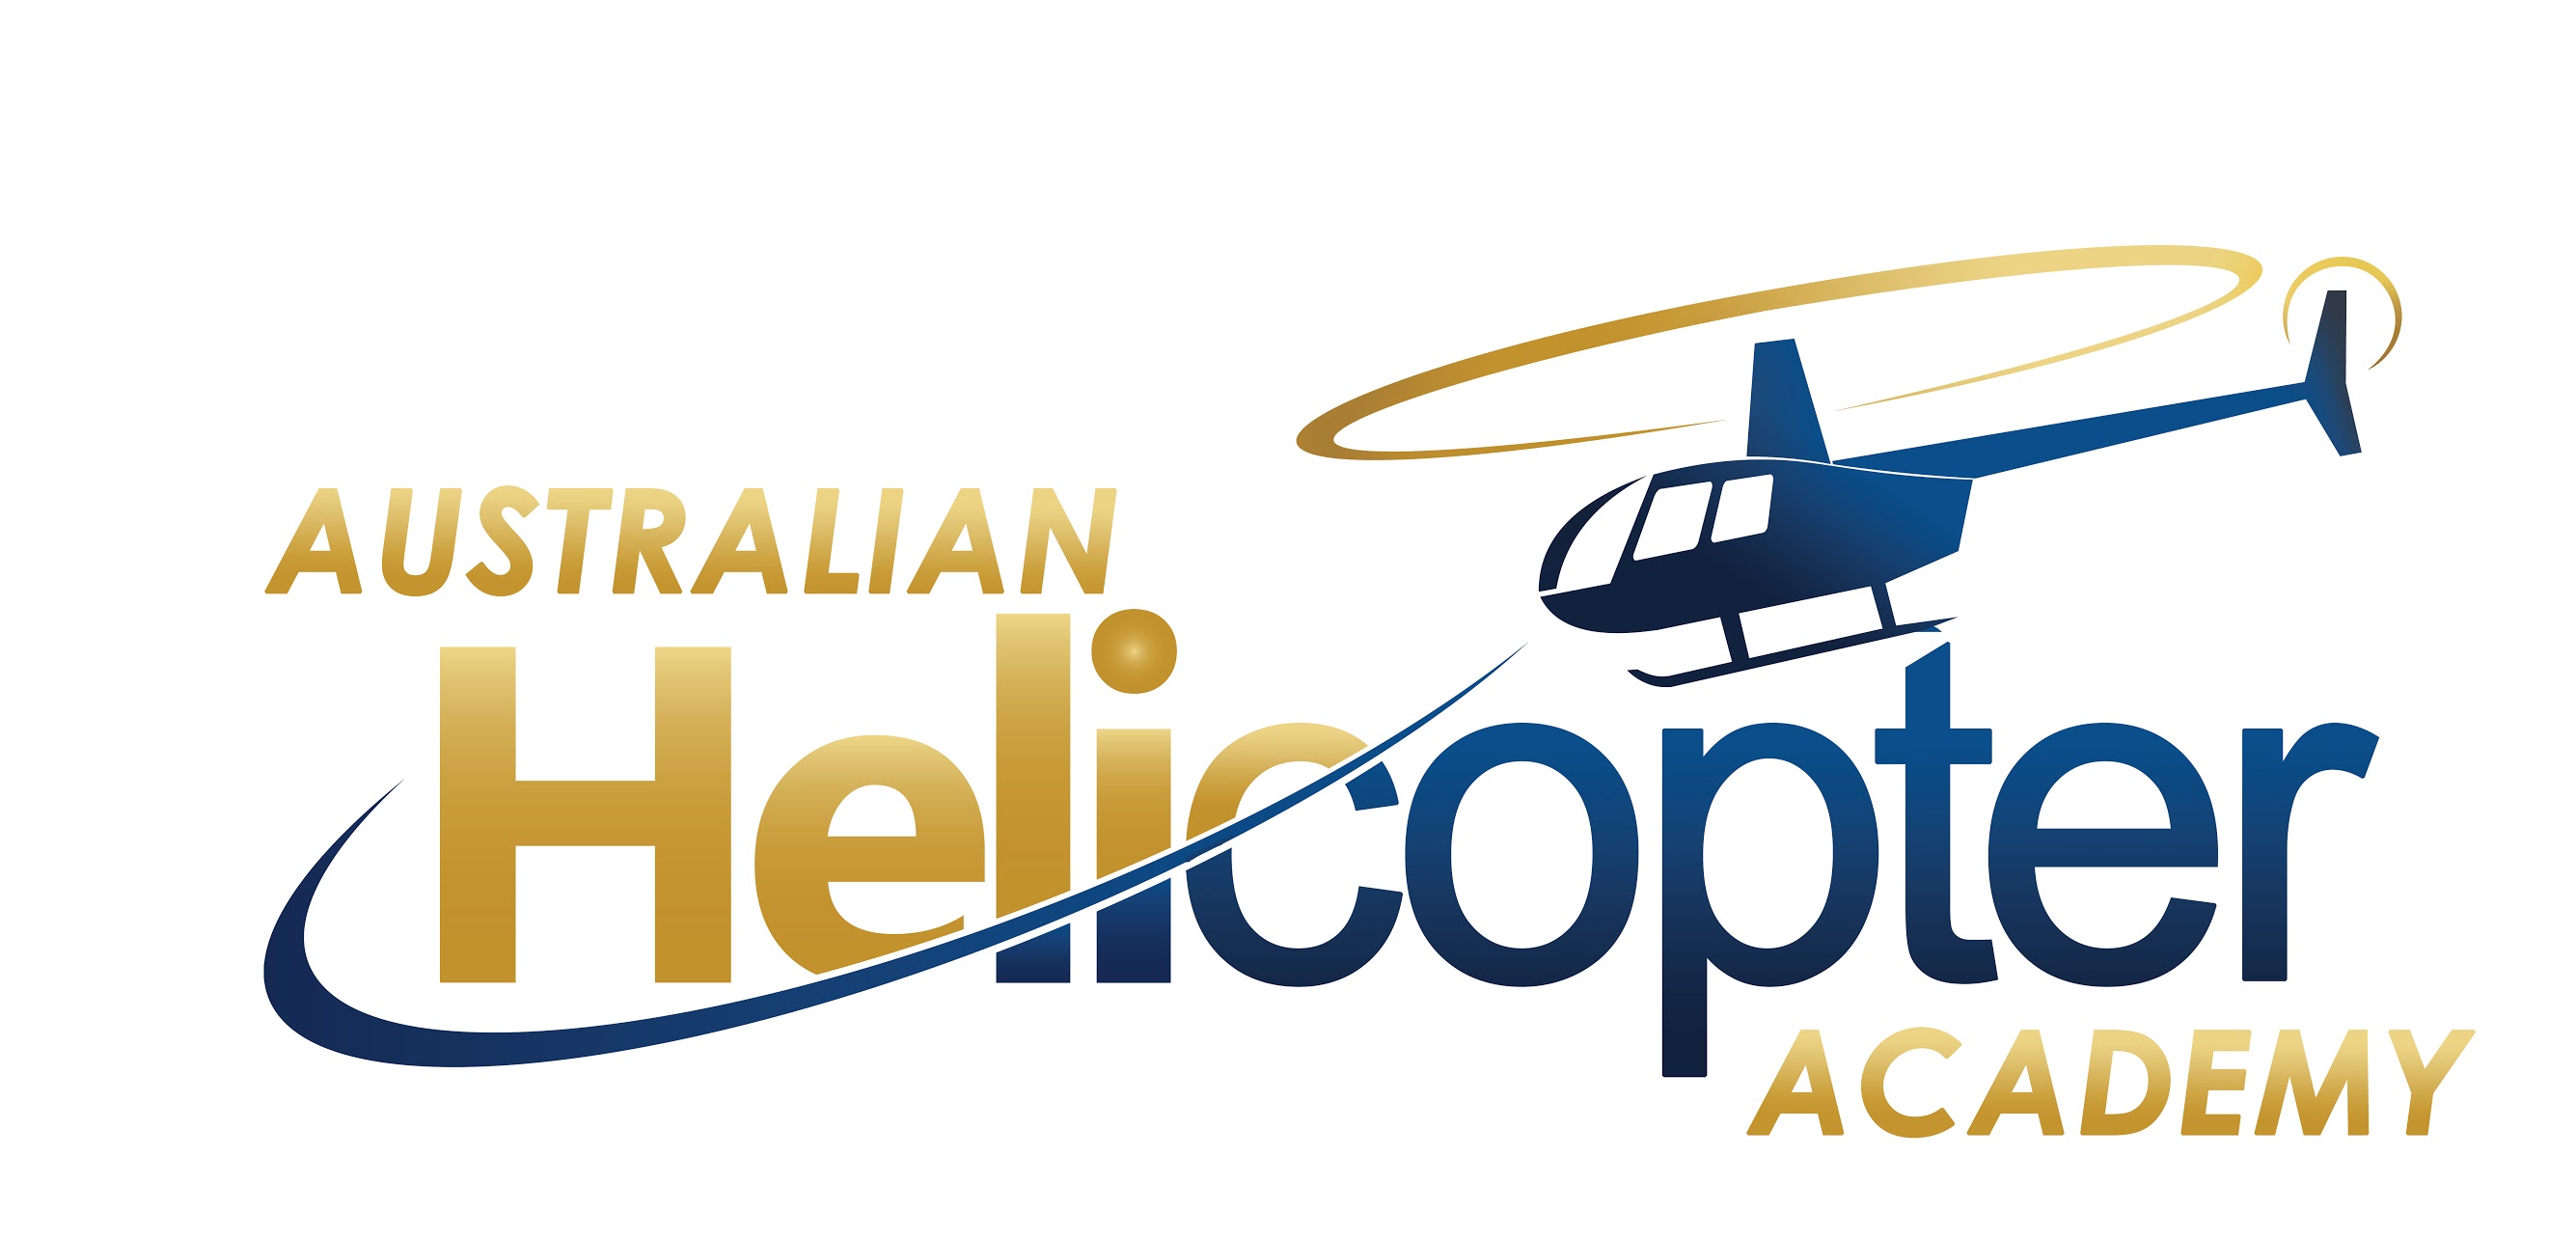 Australian Helicopter Academy